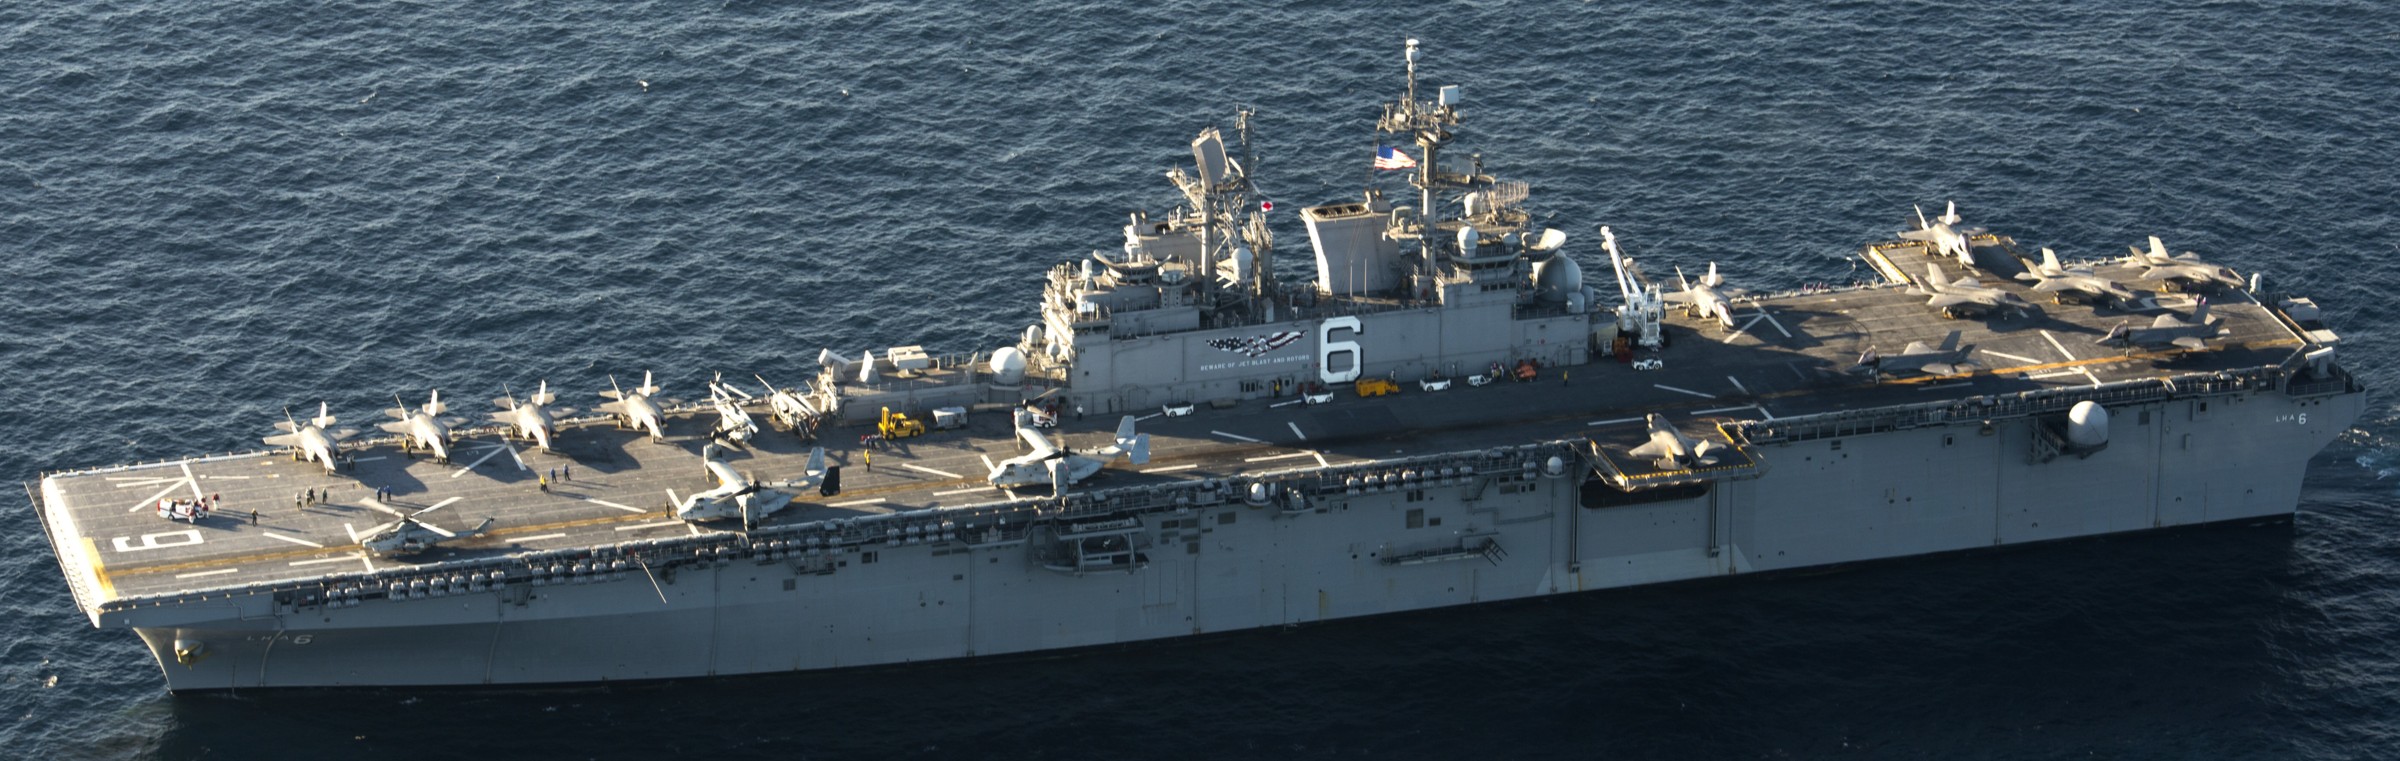 lha-6 uss america amphibious assault ship us navy 57